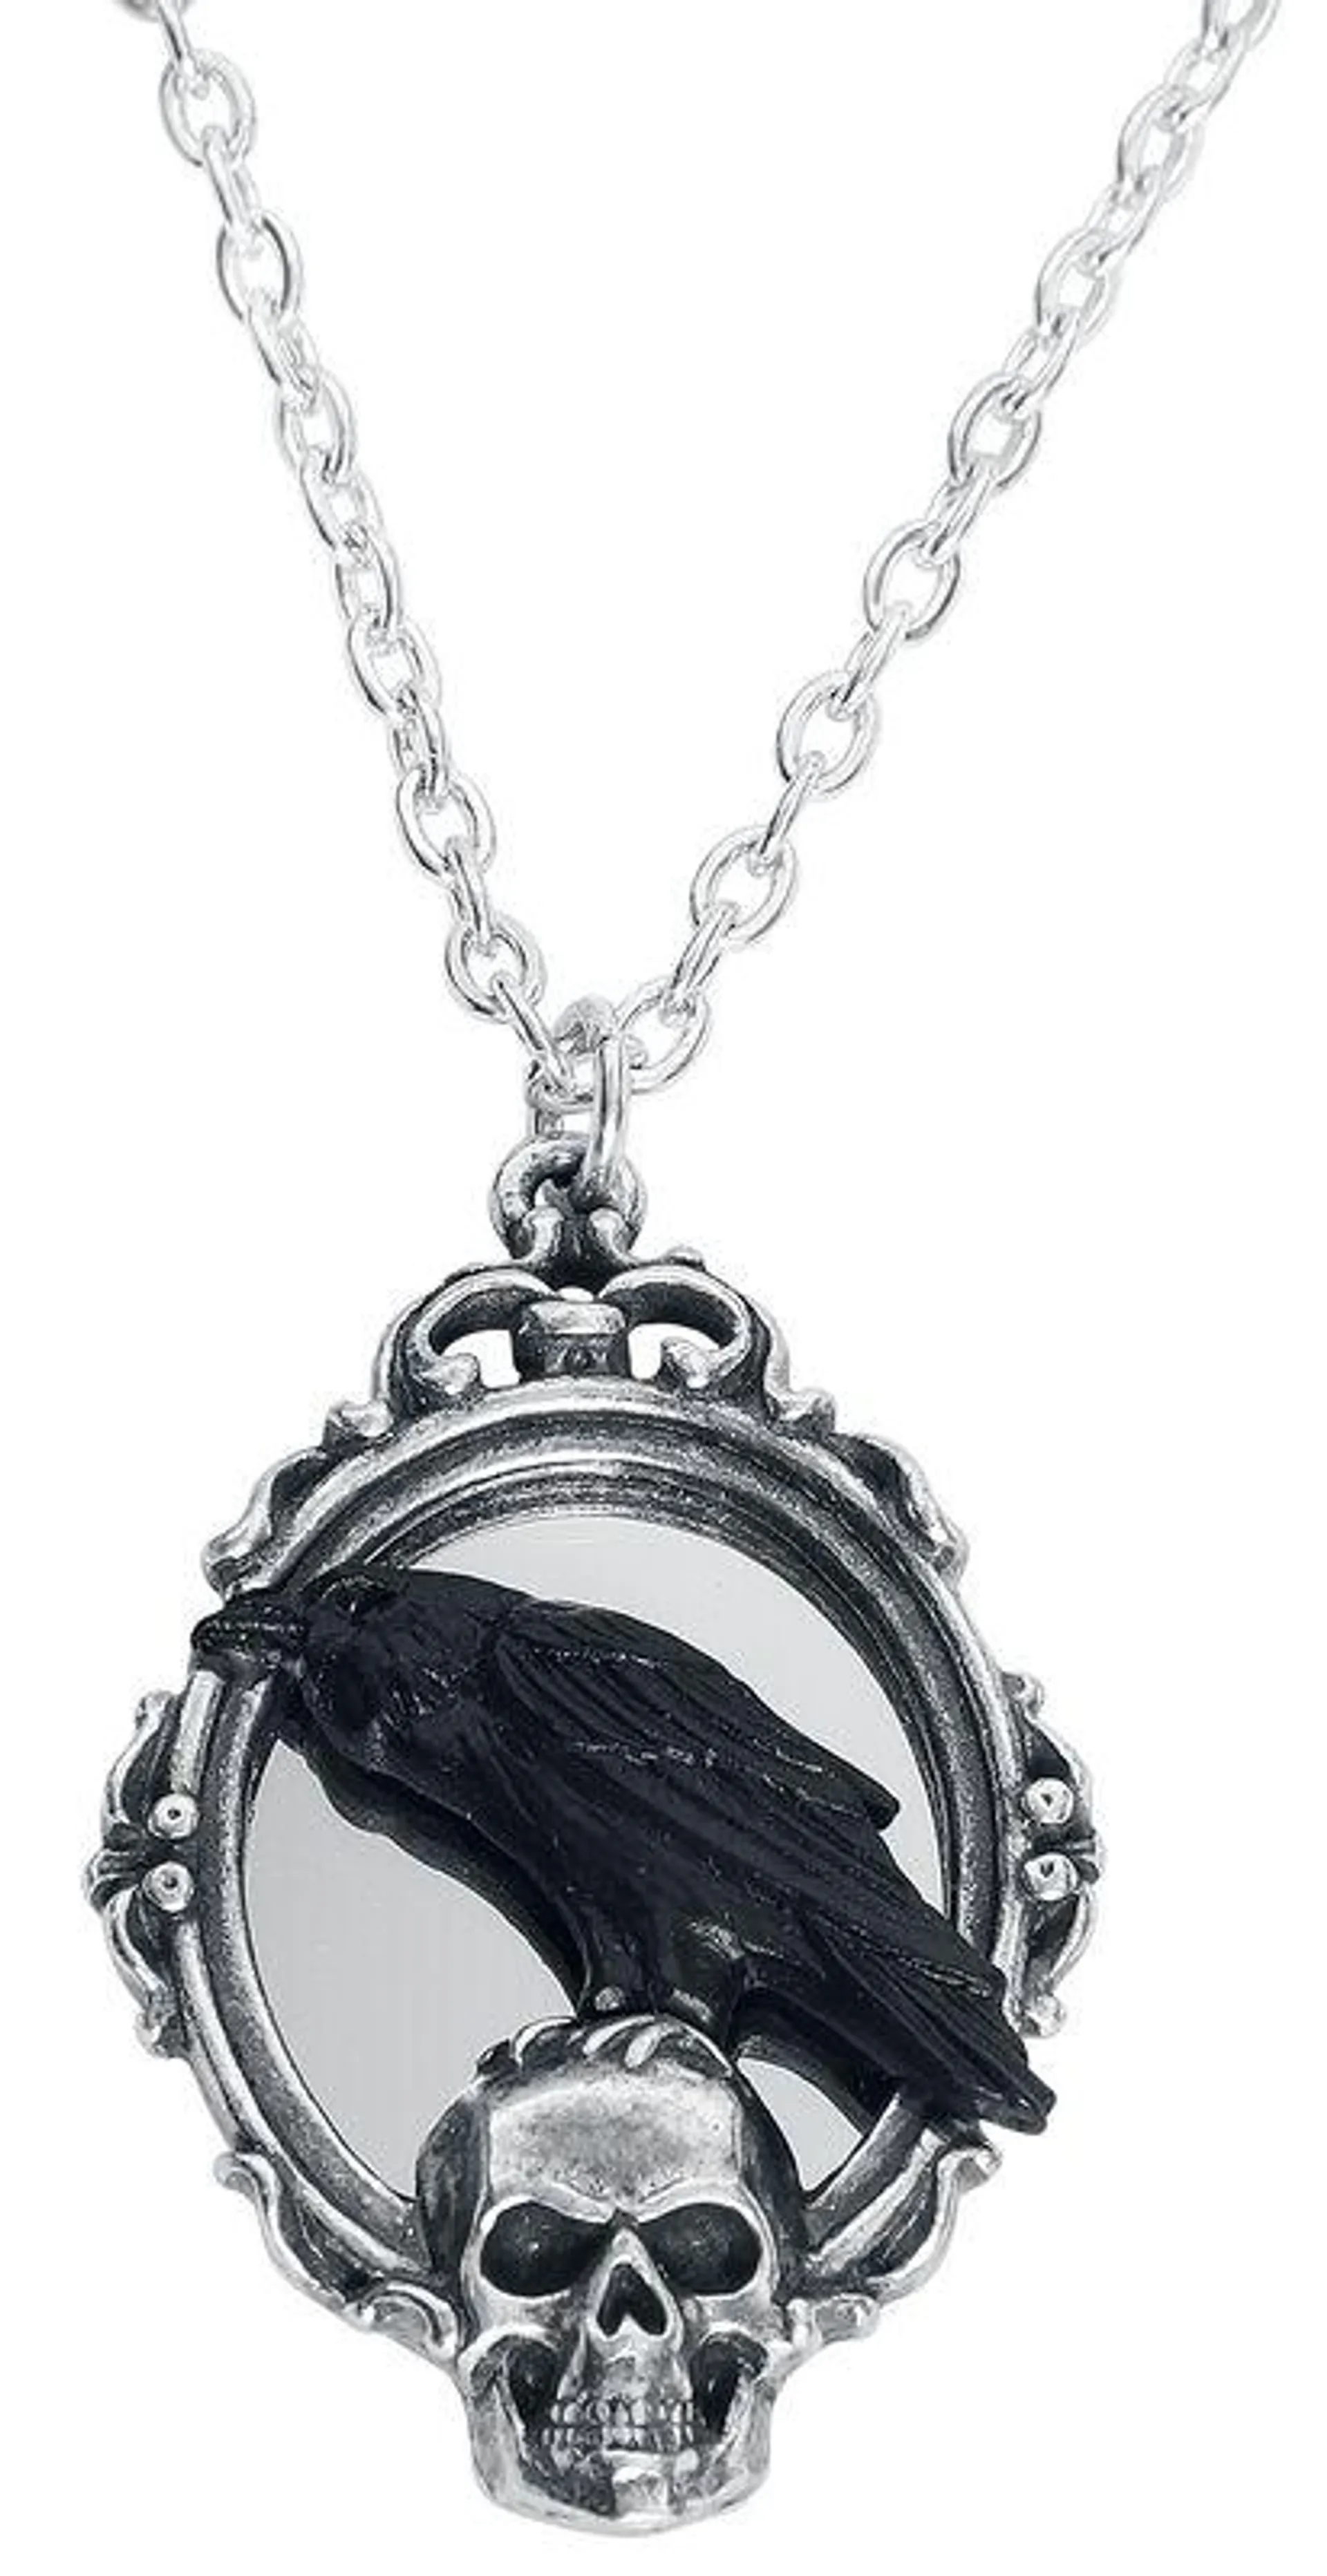 "Reflections of Poe" Collar negro/plateado de Alchemy Gothic